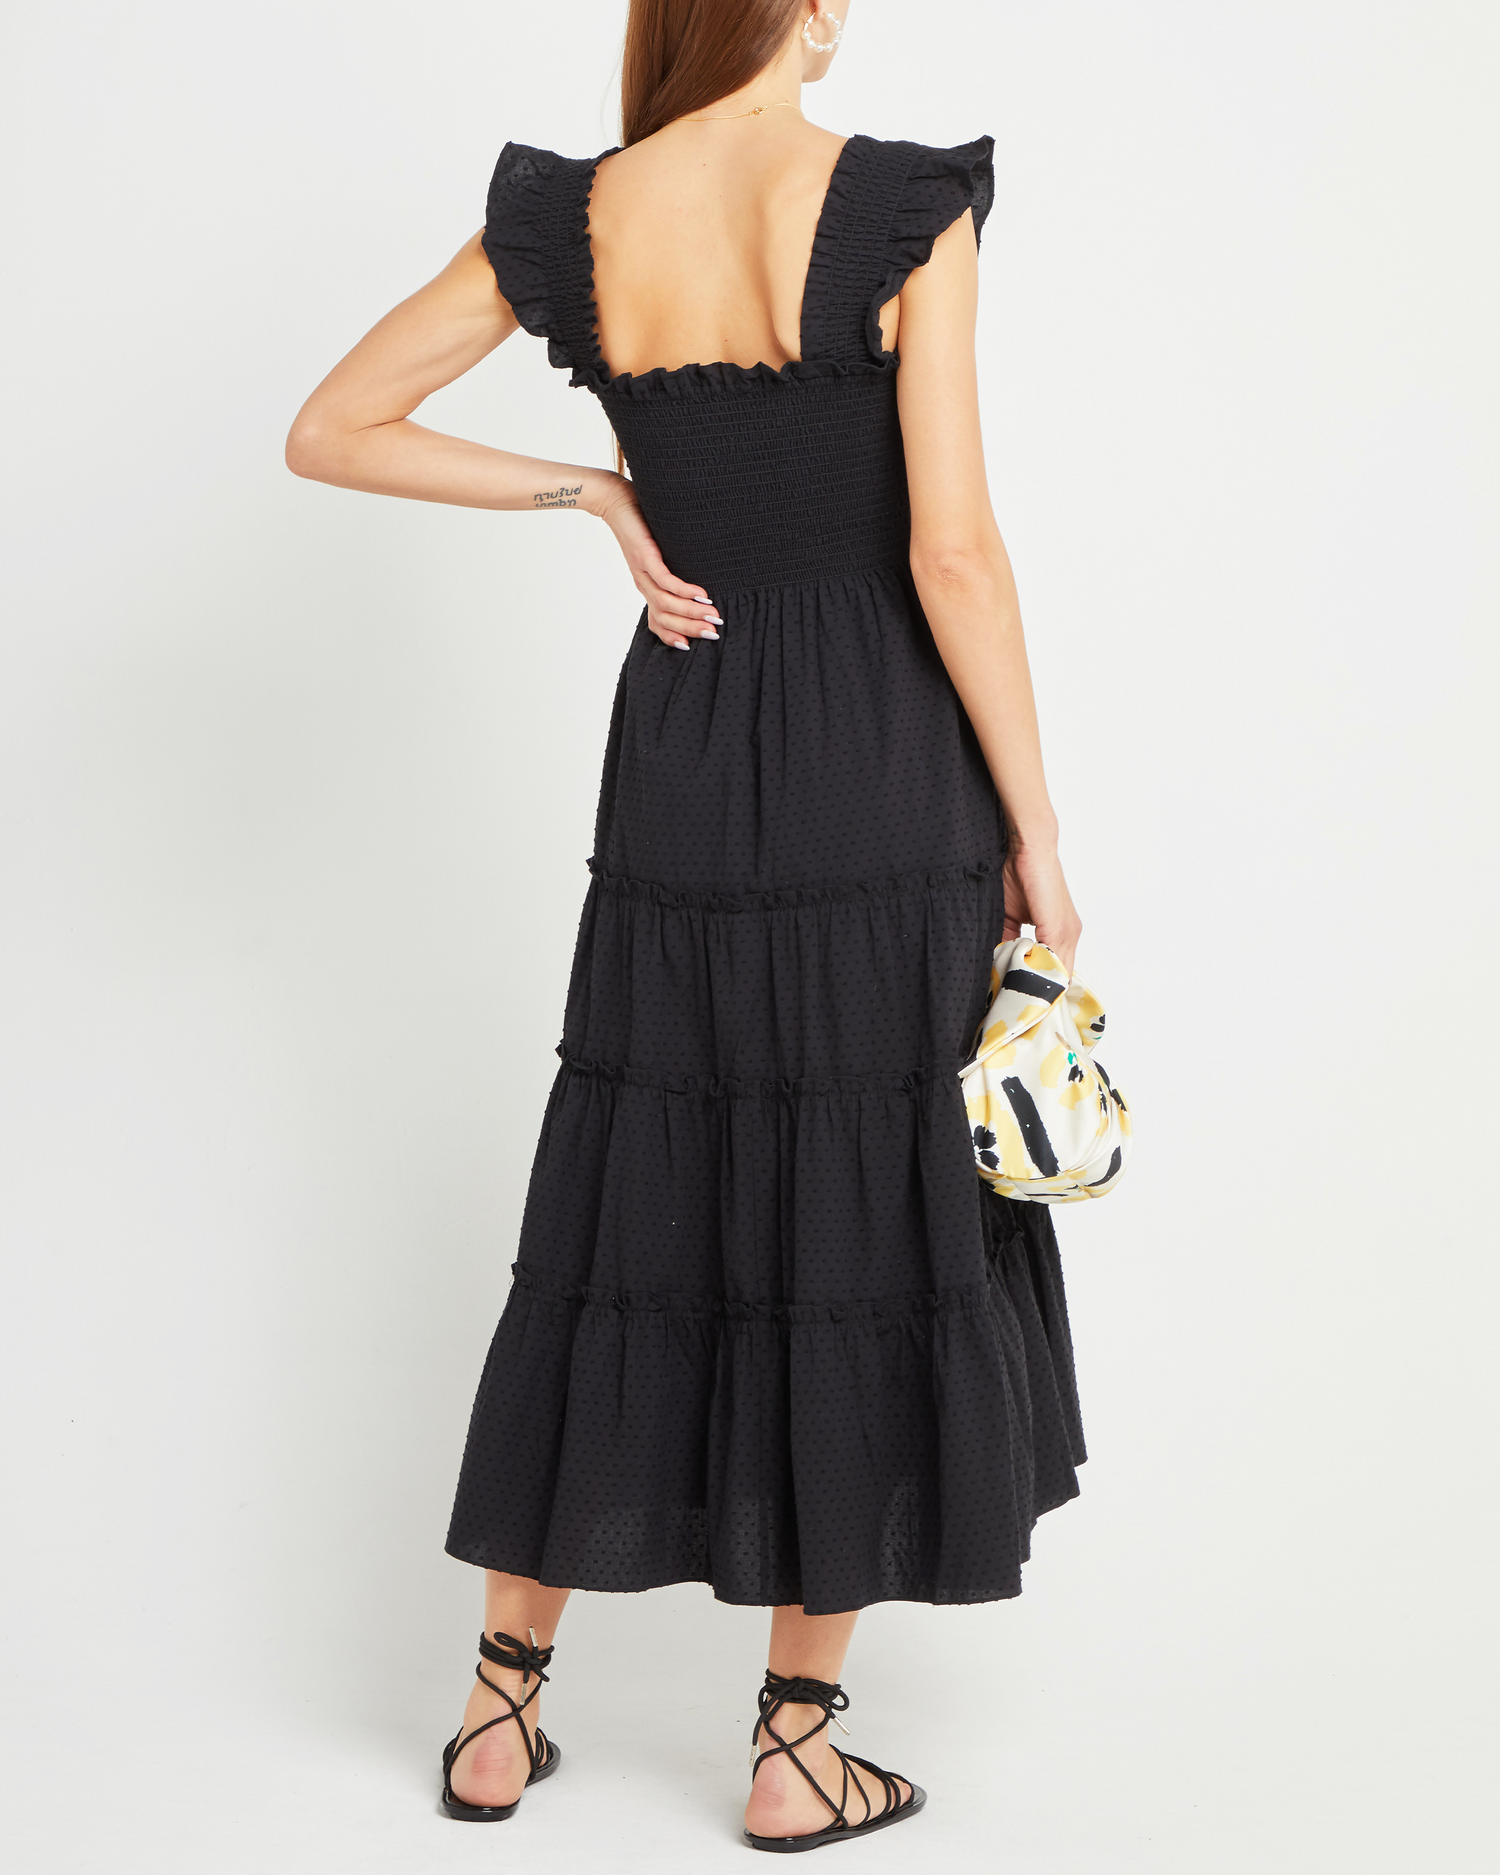 Second image of Calypso Maxi Dress, a black maxi dress, swiss dot material, smocked bodice, ruffles cap sleeves 